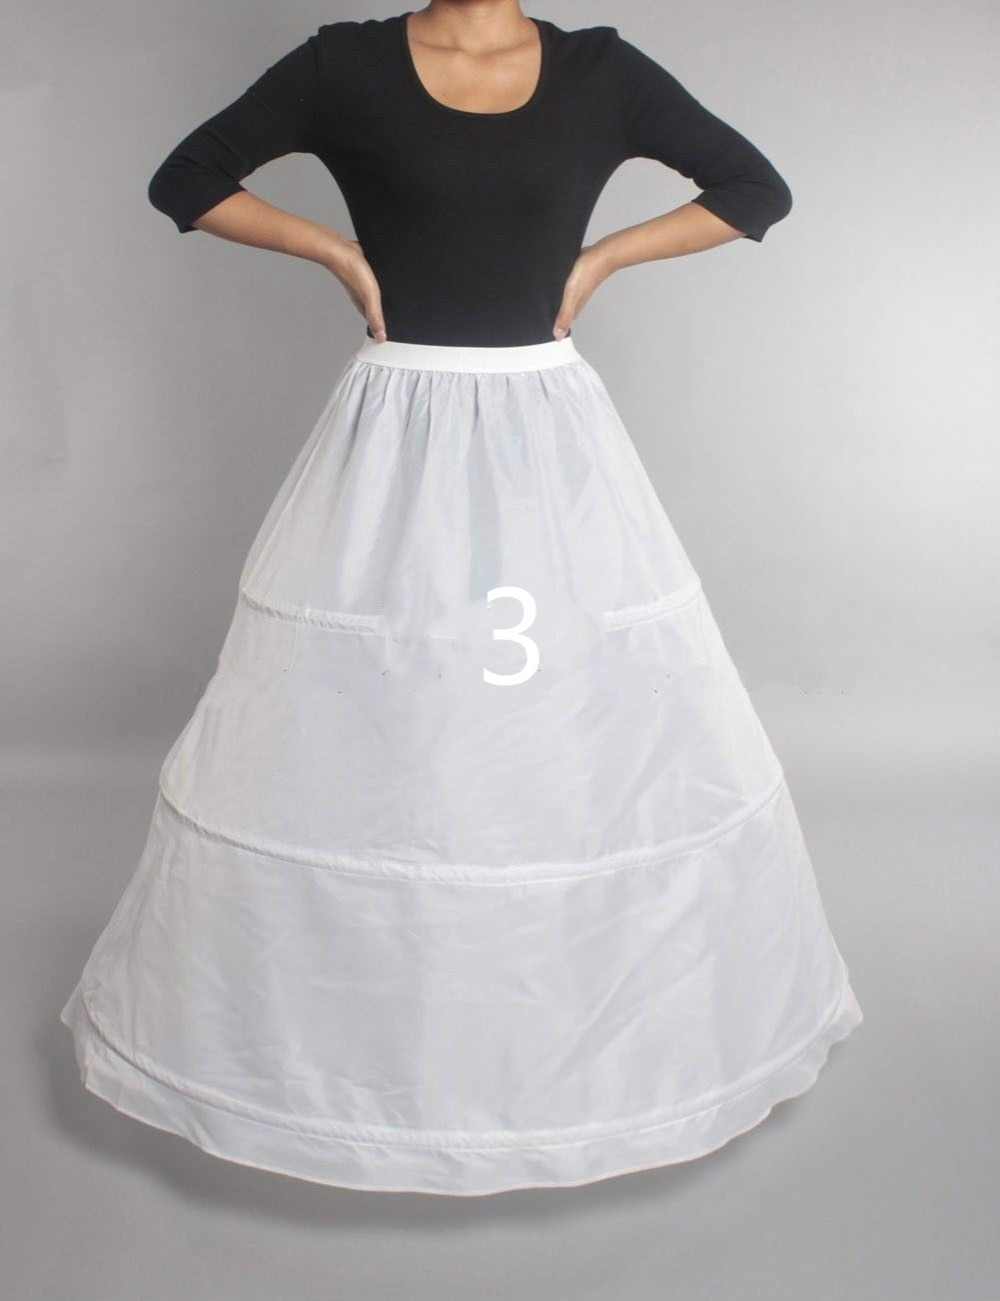 Three circle hoop Petticoat Underskirt bridal Wedding Petticoat Hoop Crinoline Prom Underskirt Fancy Skirt Slip In Stock